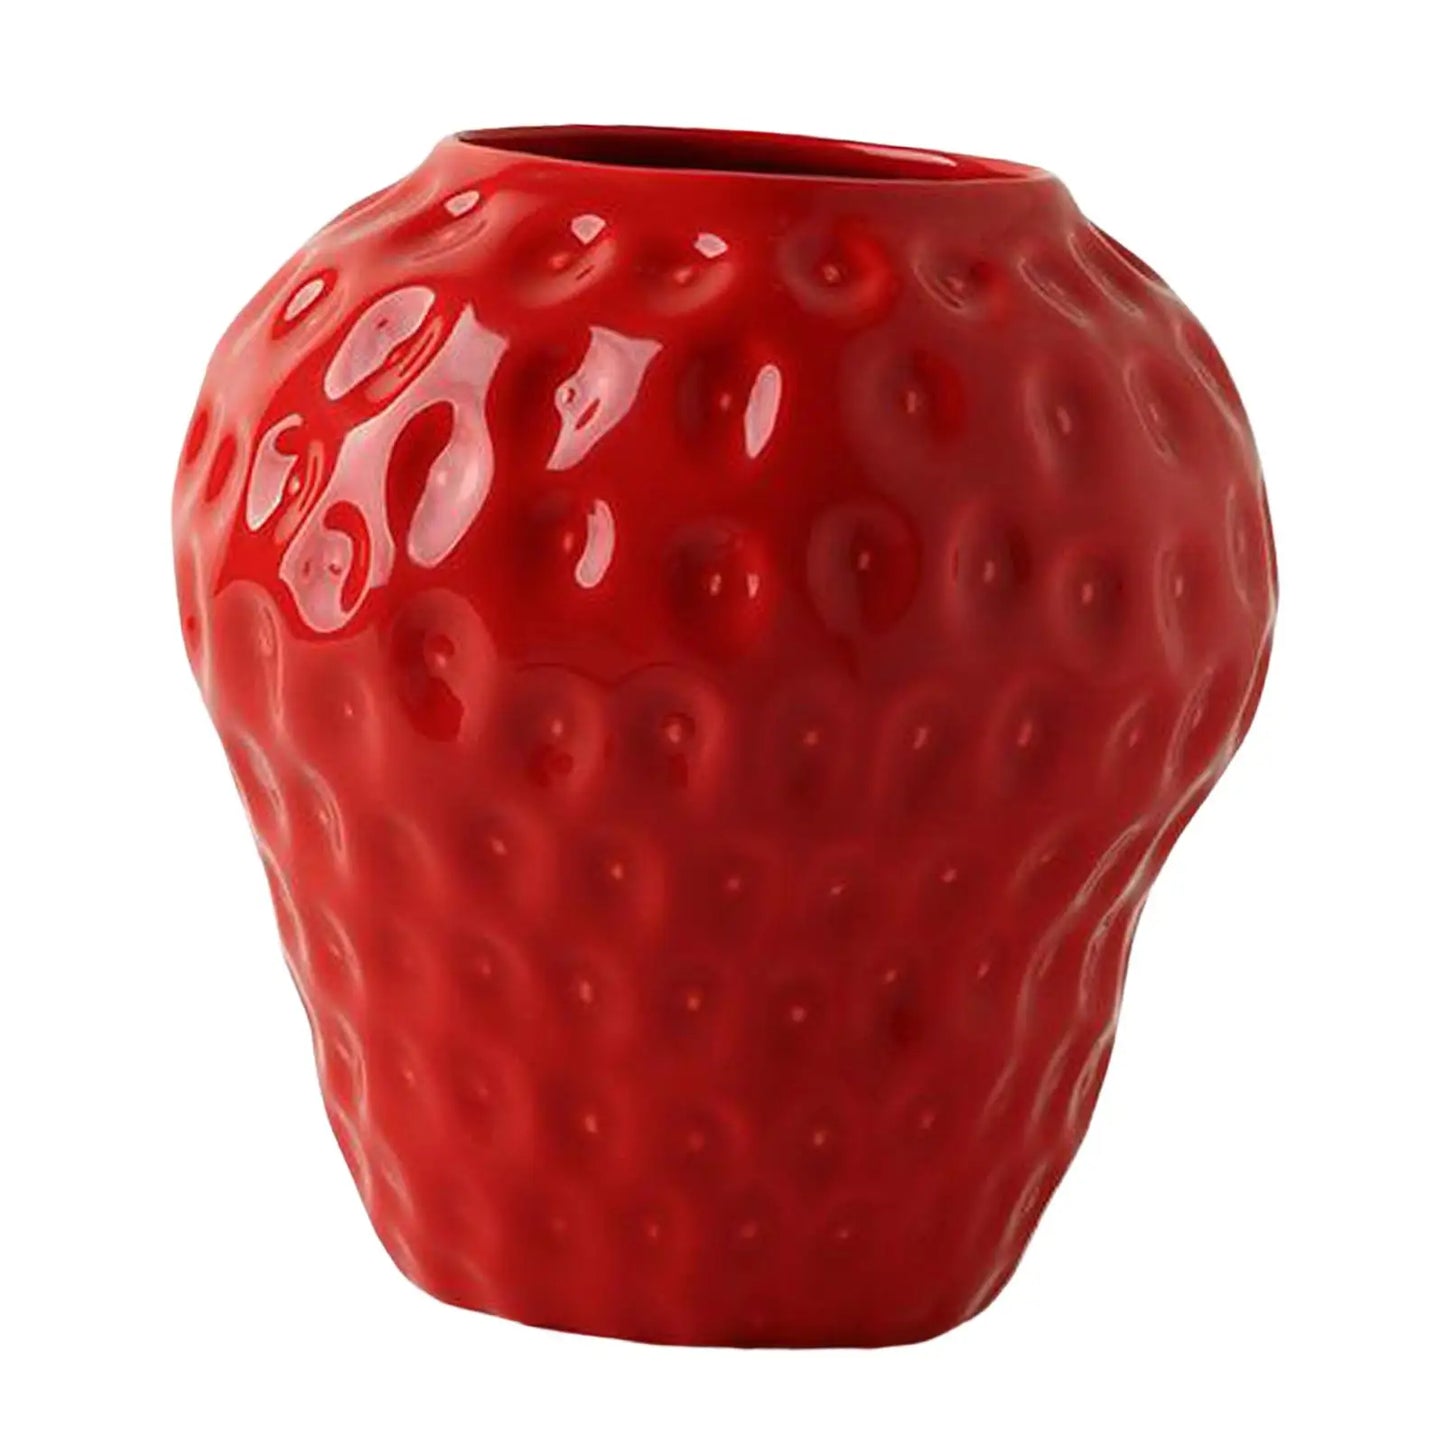 Vintage Style Strawberry Vases Flower Pot Vase Decorative Ornament Flower Arrangement for Office Homestay Party Gifts Decor